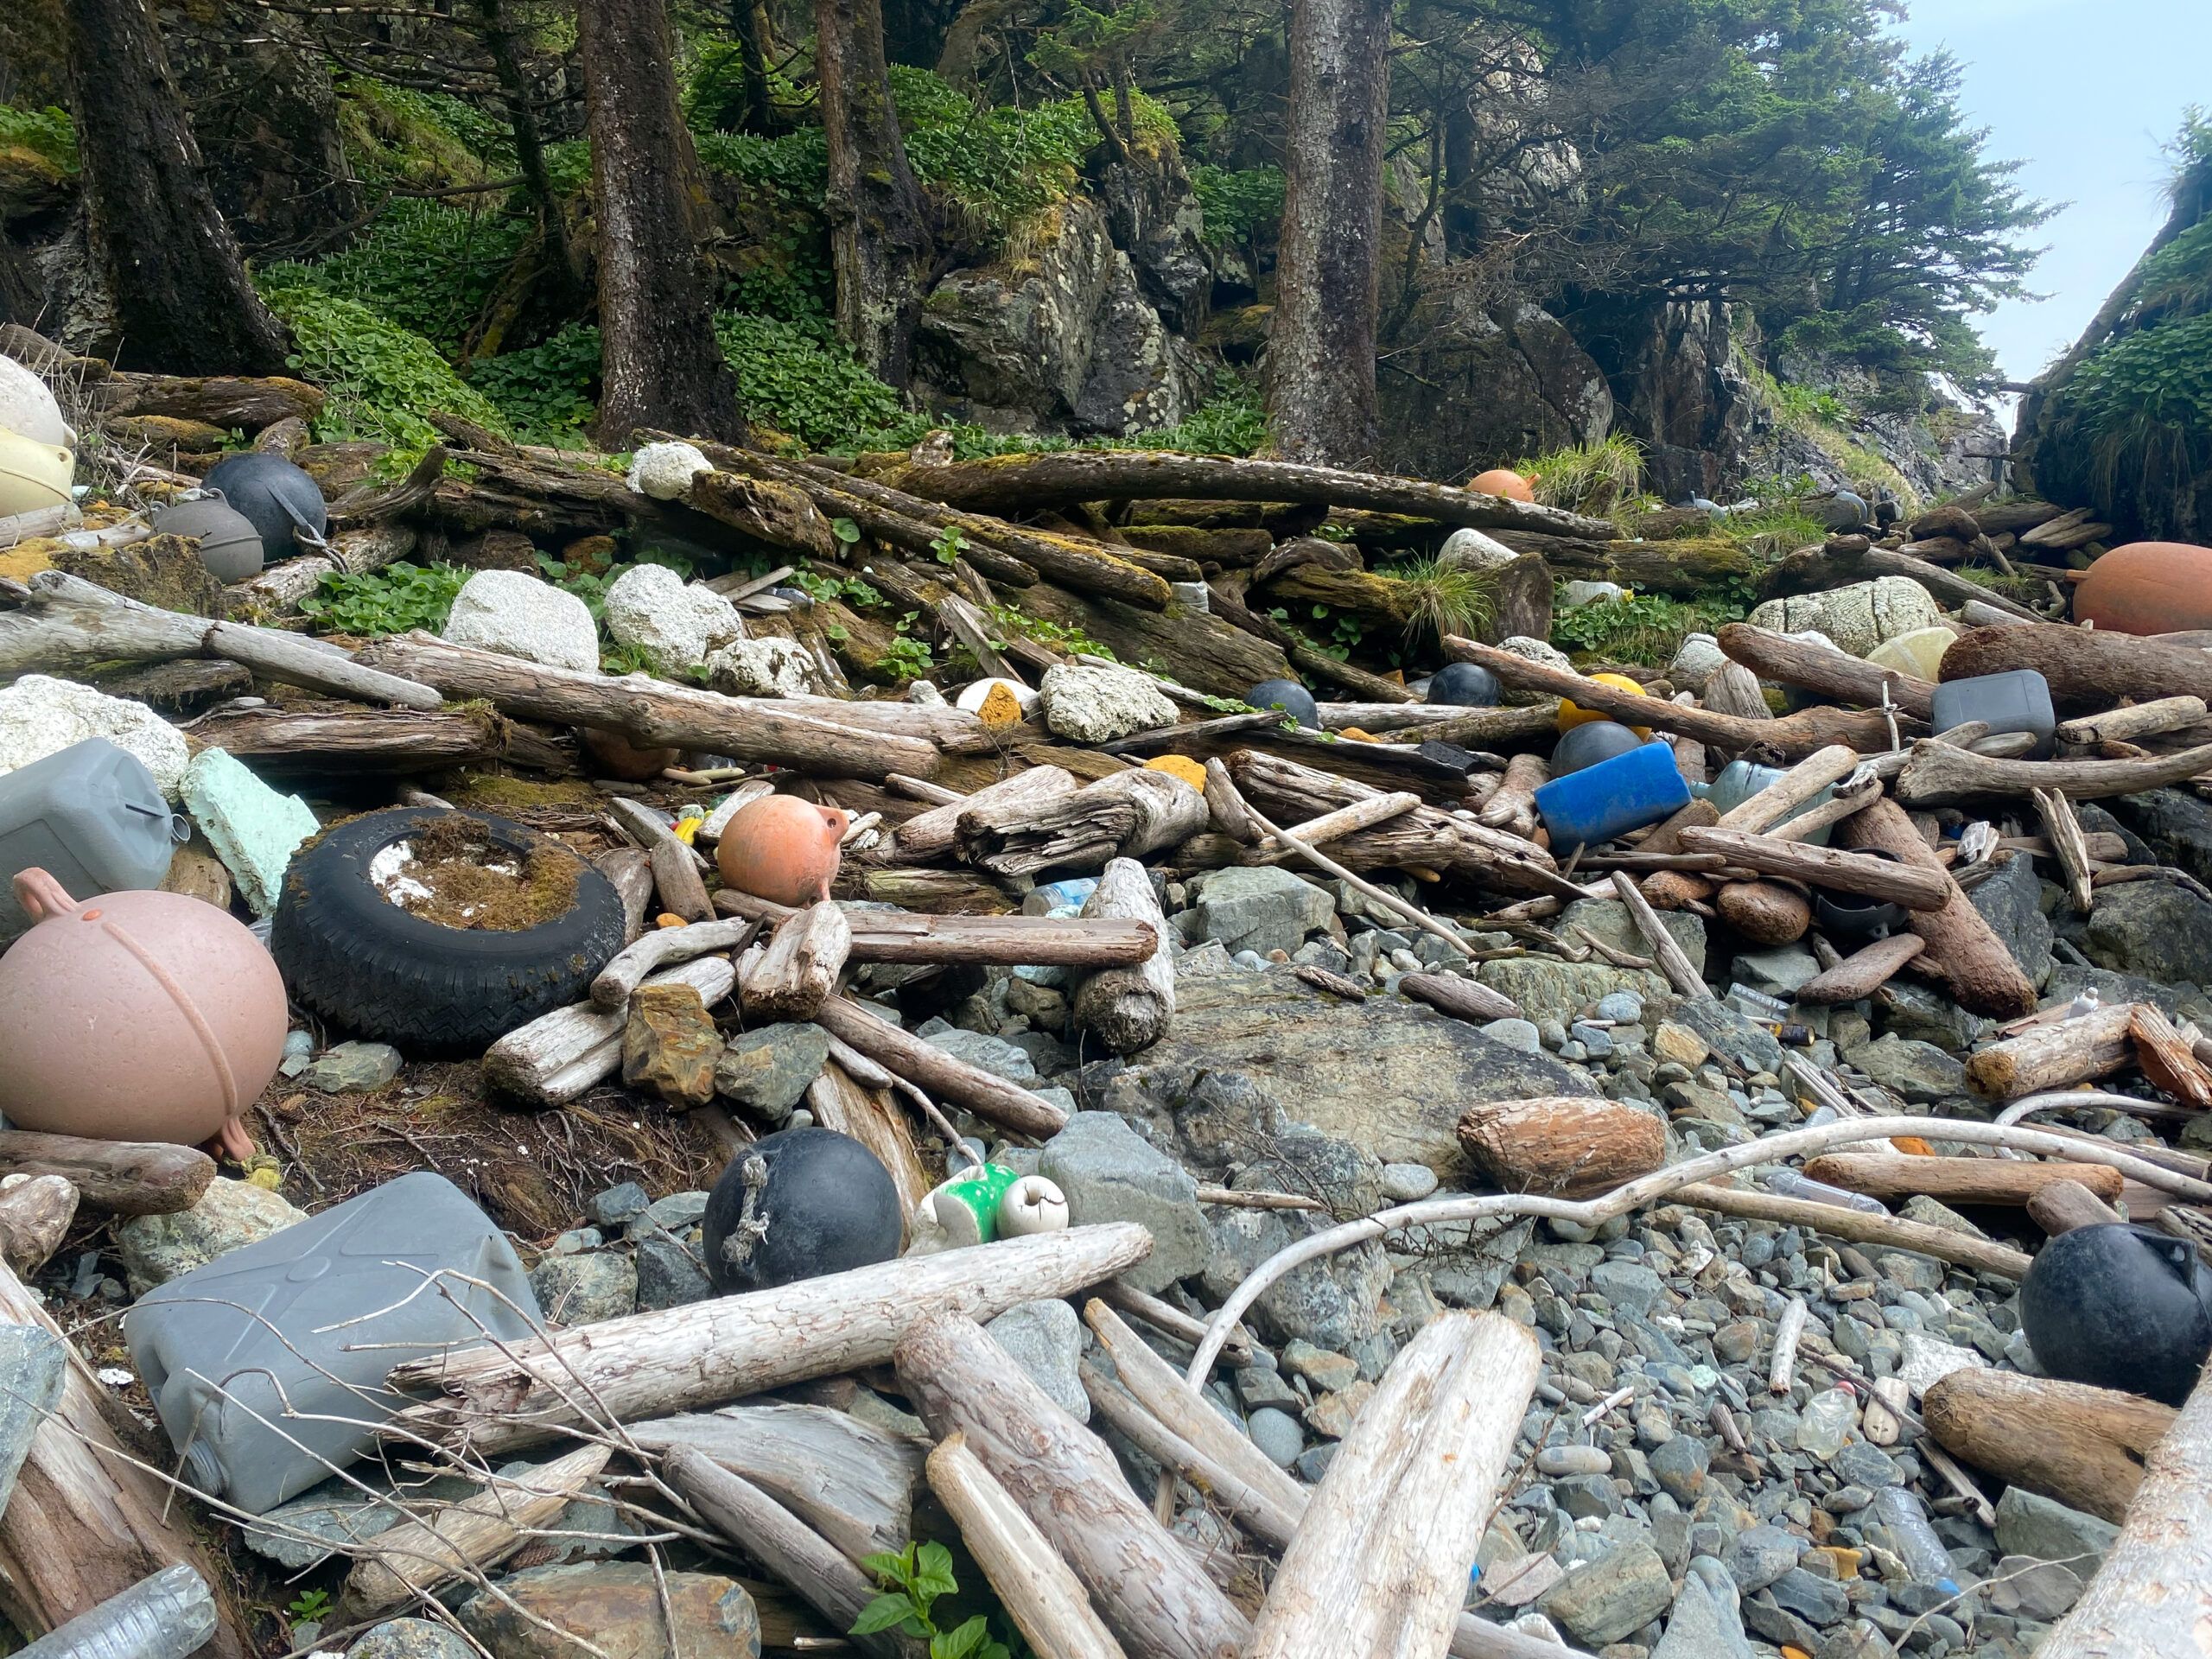 piles of debris on a rocky beach